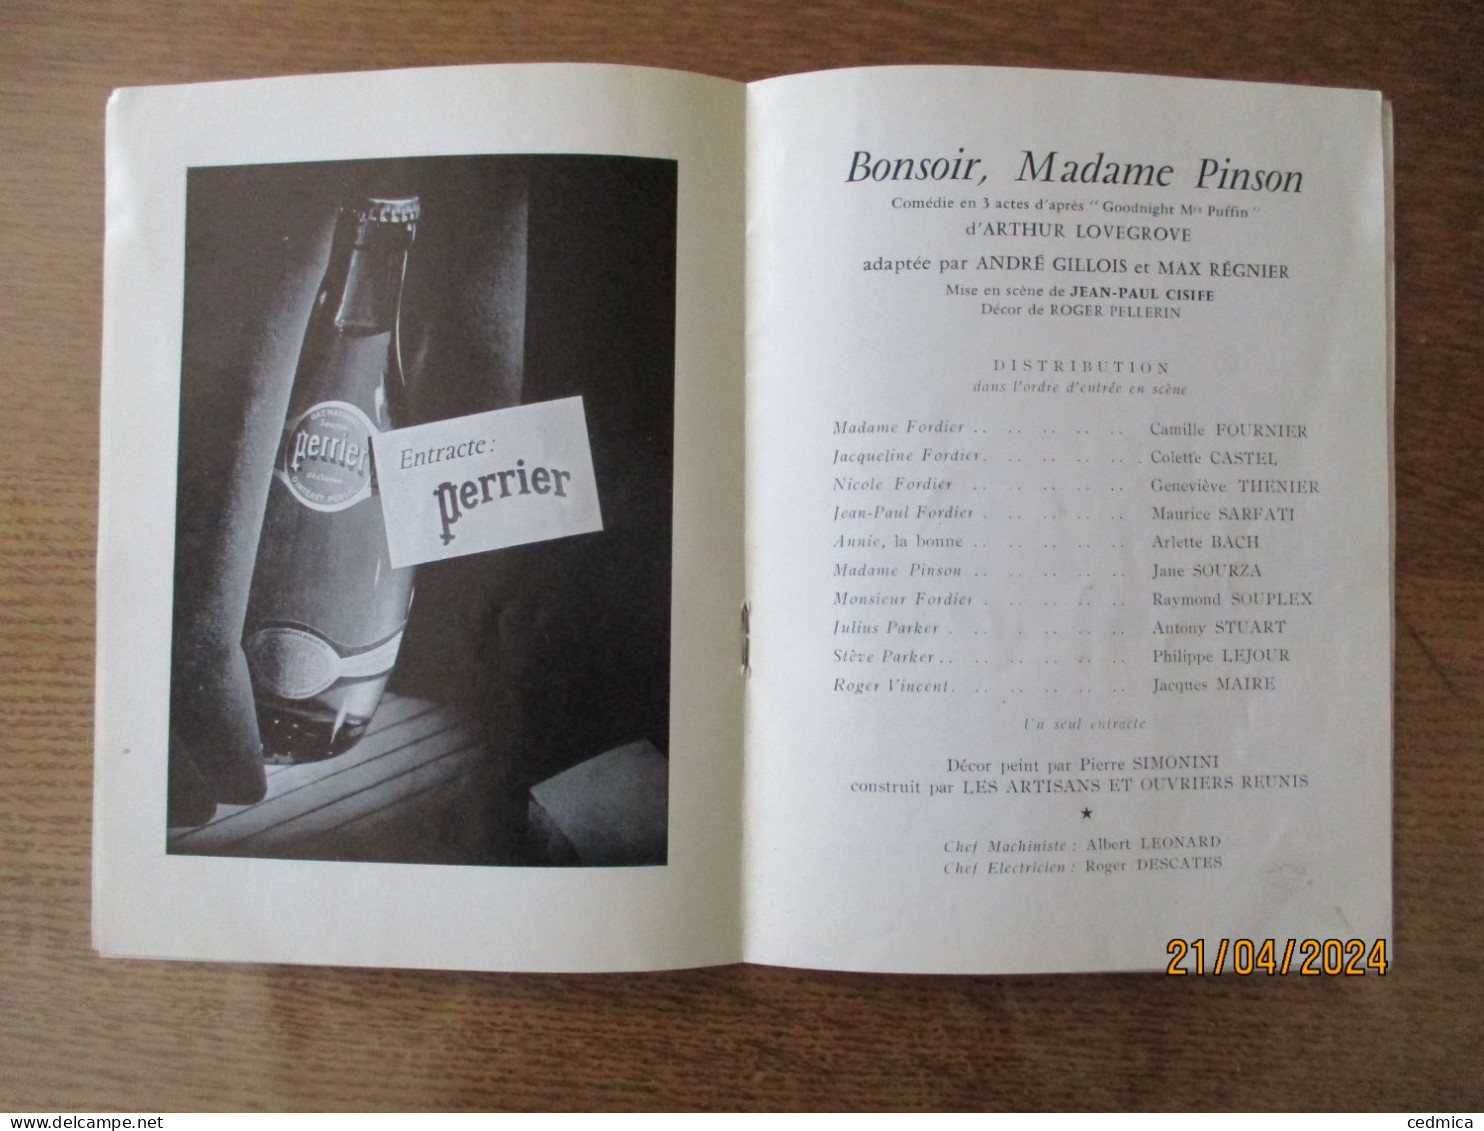 THEATRE DE LA PORTE St MARTIN SAISON 1963-1964 BONSOIR,MADAME PINSON - Programas